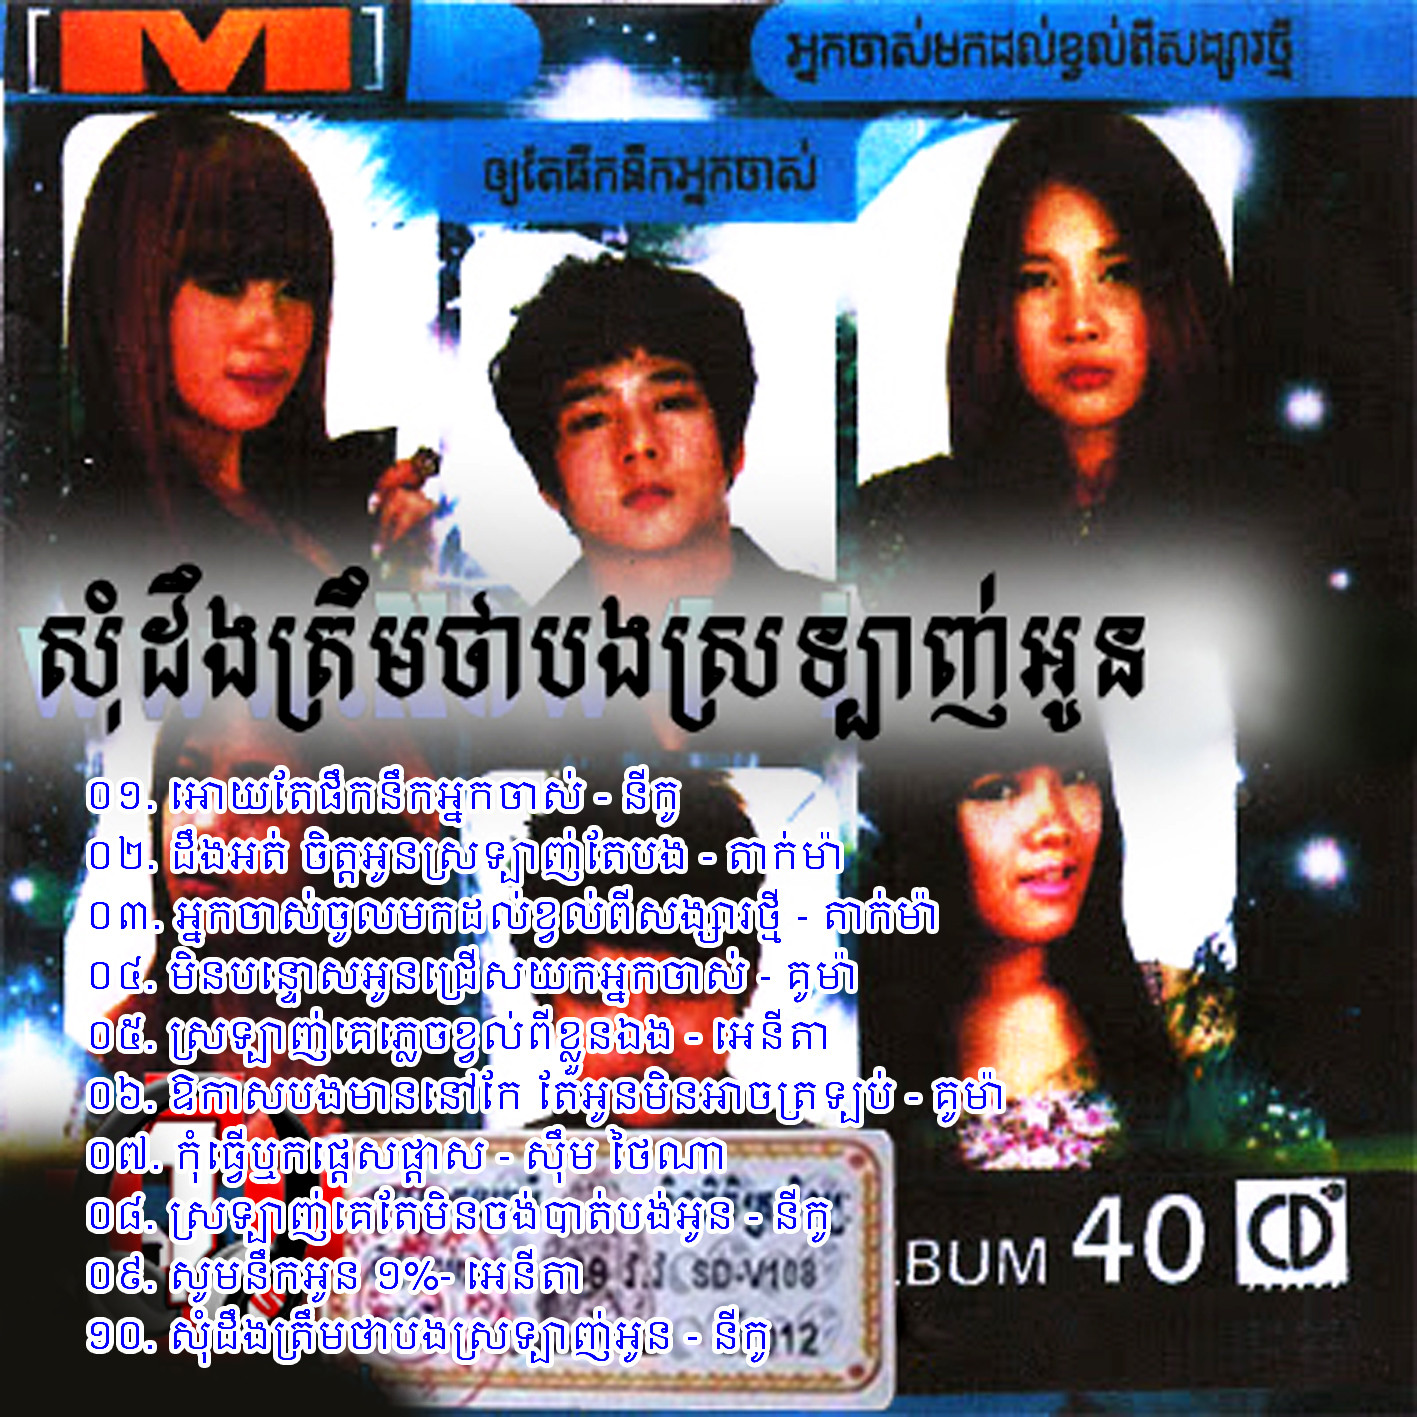 M CD Vol 40